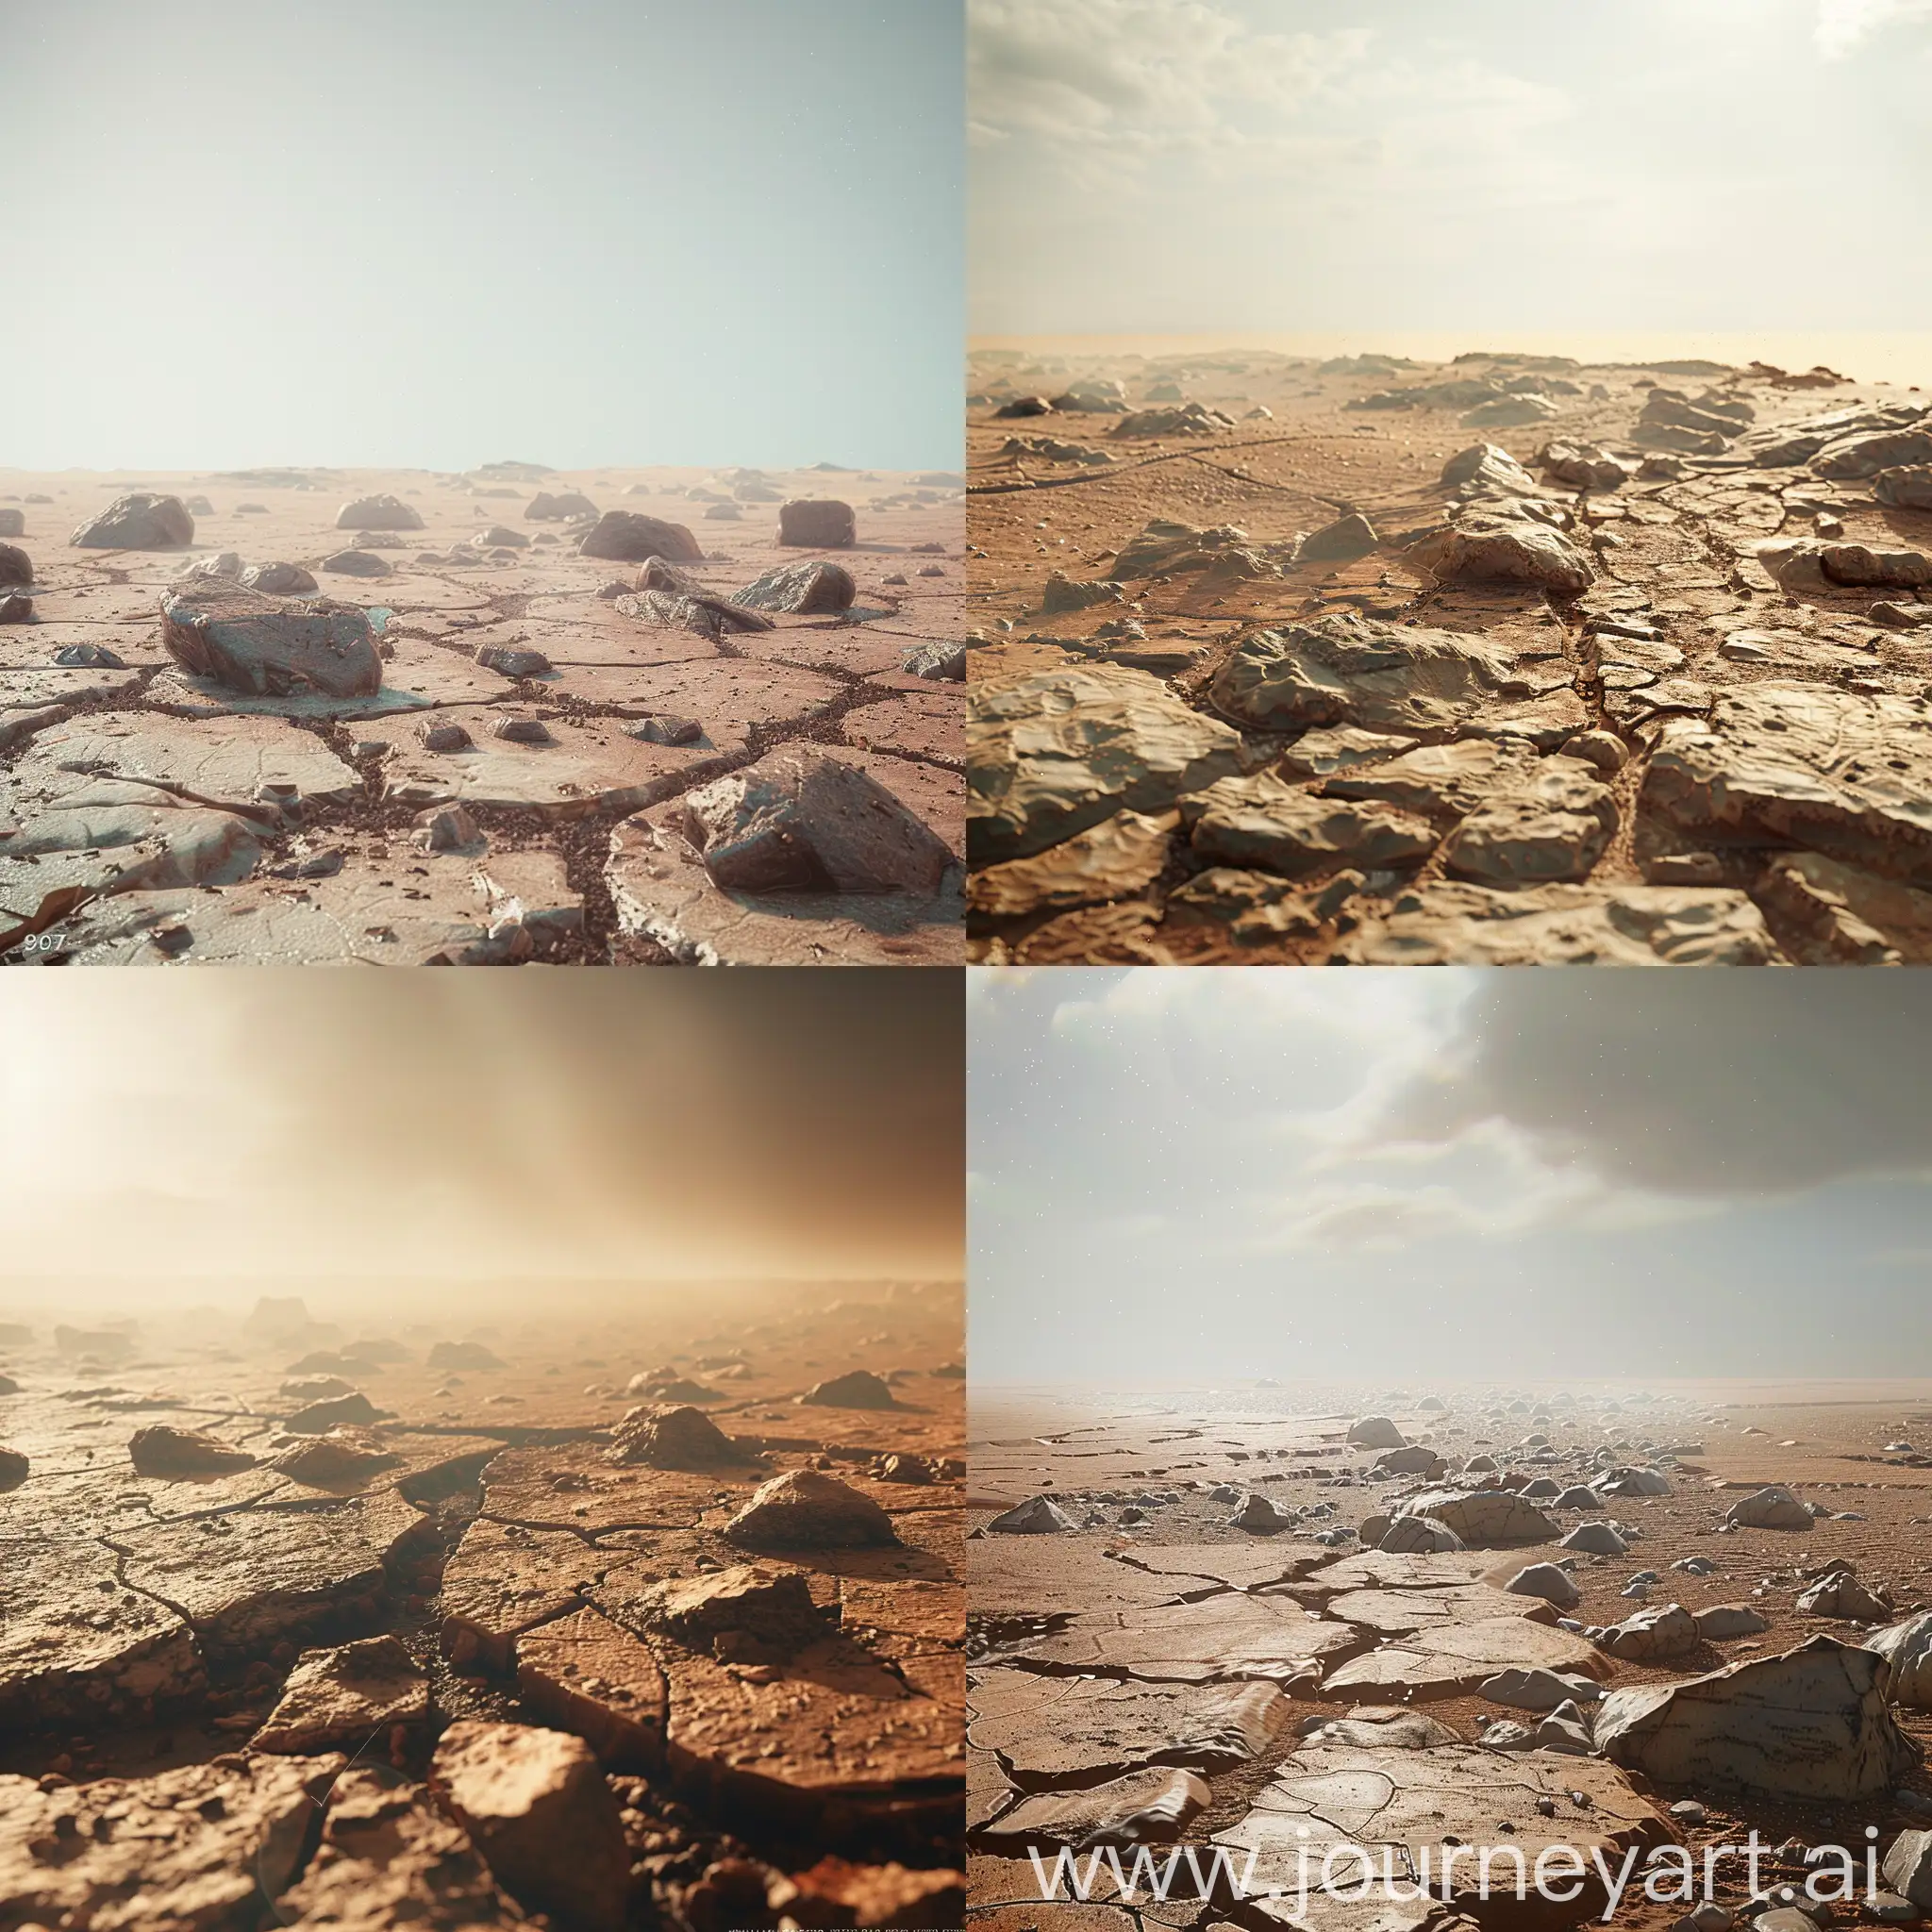 Mars-Landscape-Rocky-Terrain-and-Cracked-Earth-under-a-Hazy-Sky